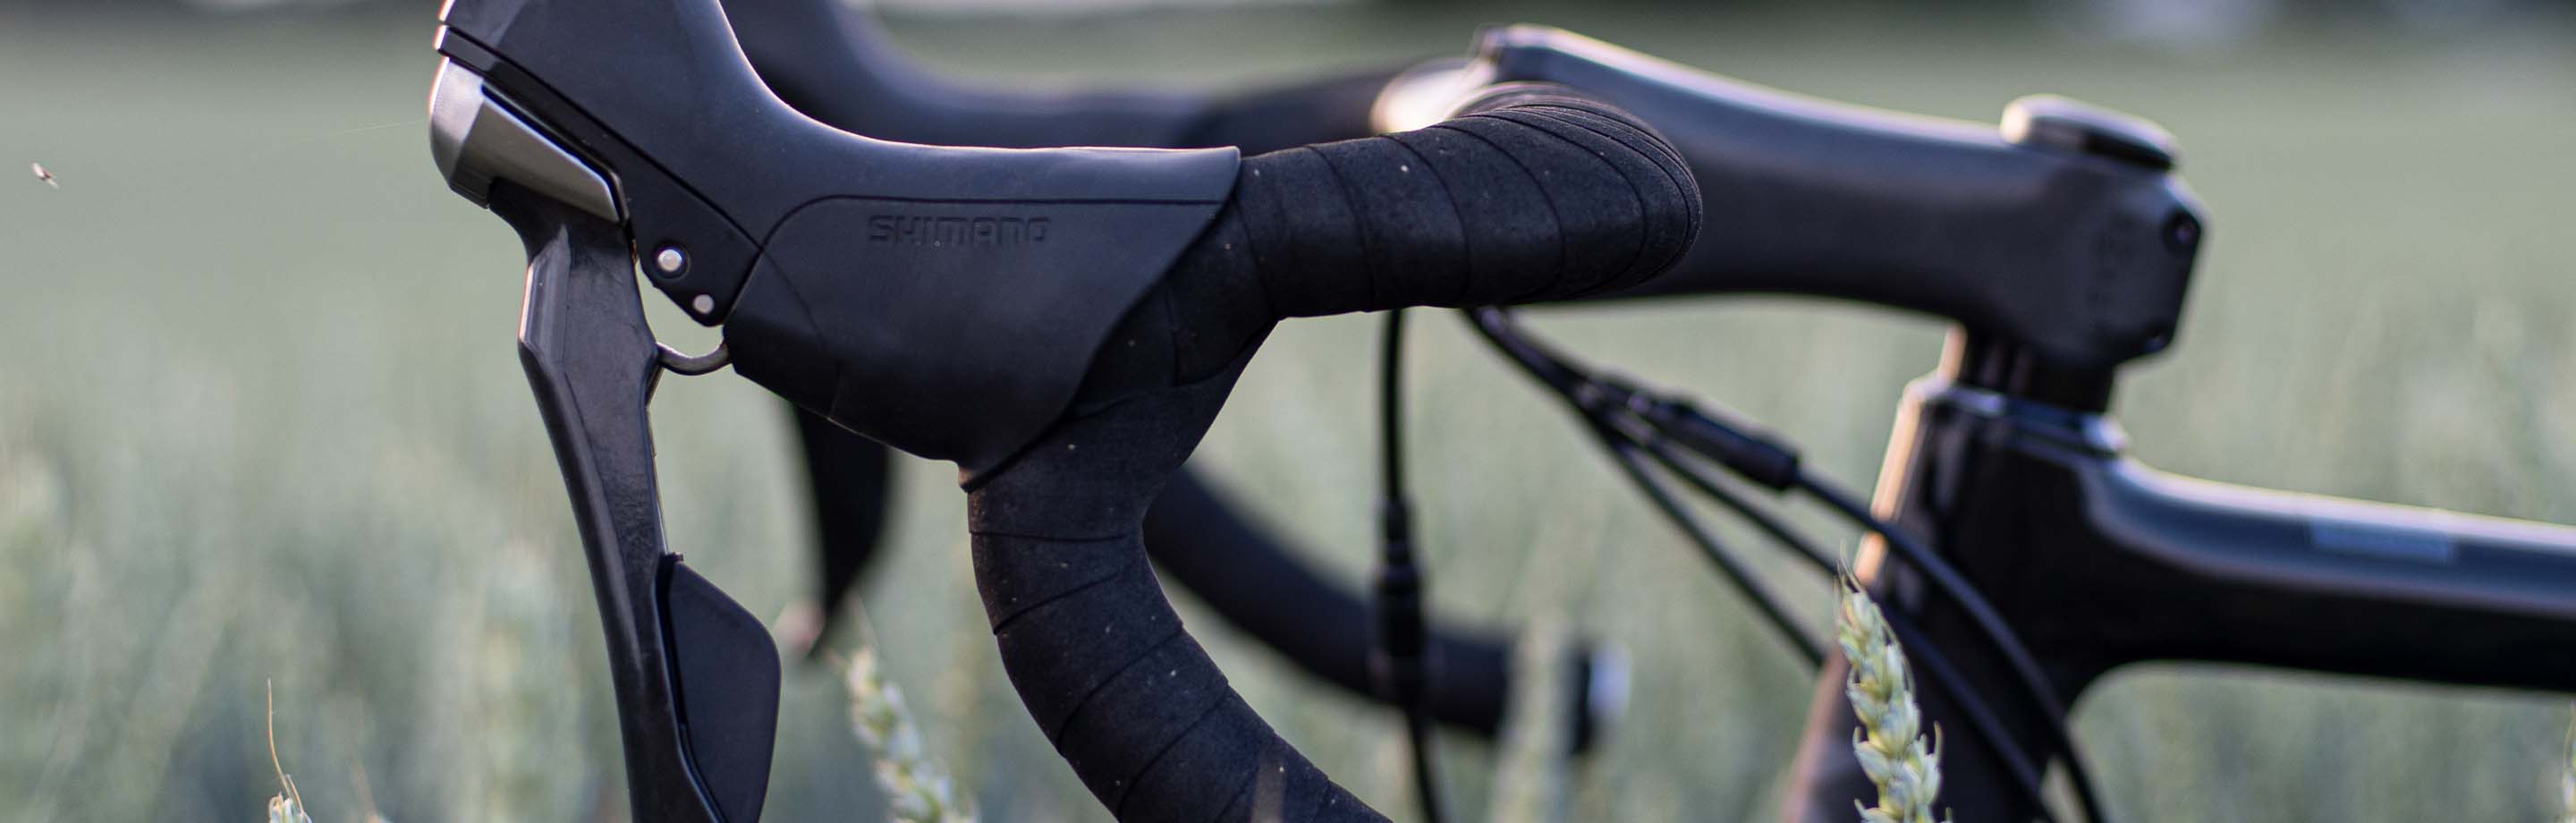 BEAST Components - ultralichte carbon fietsonderdelen Handmade in Germany